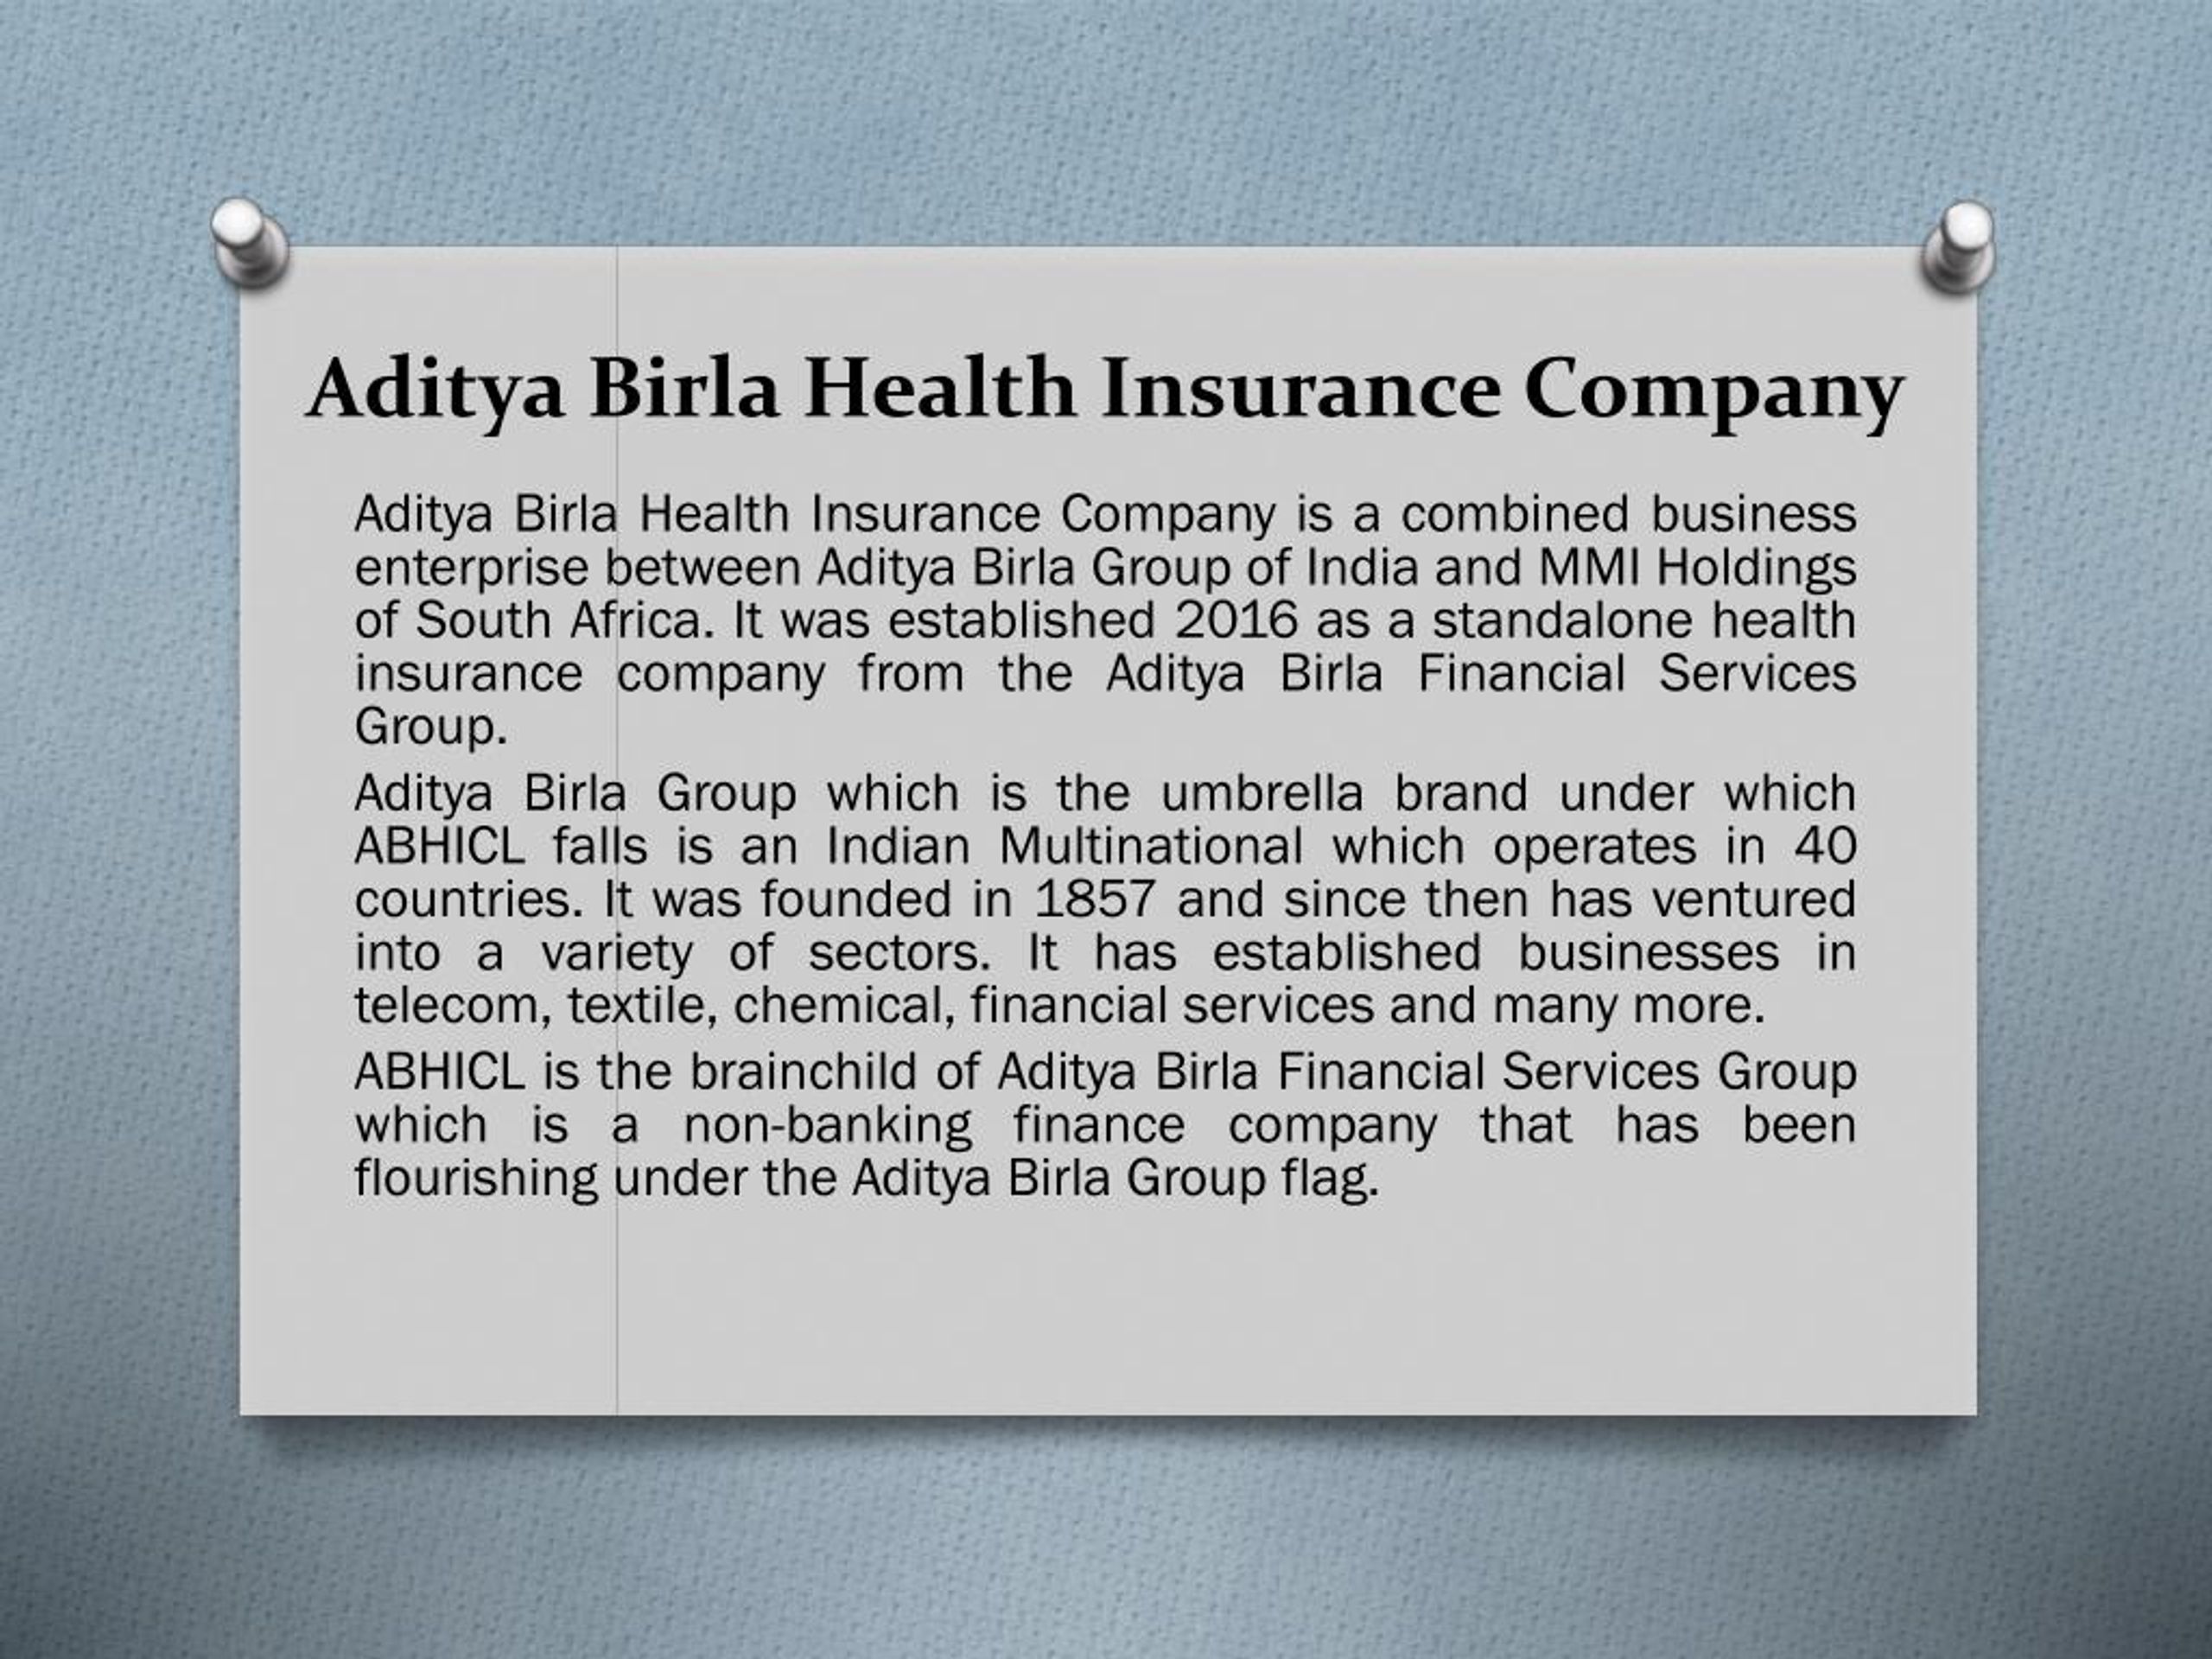 aditya birla sun life insurance company limited